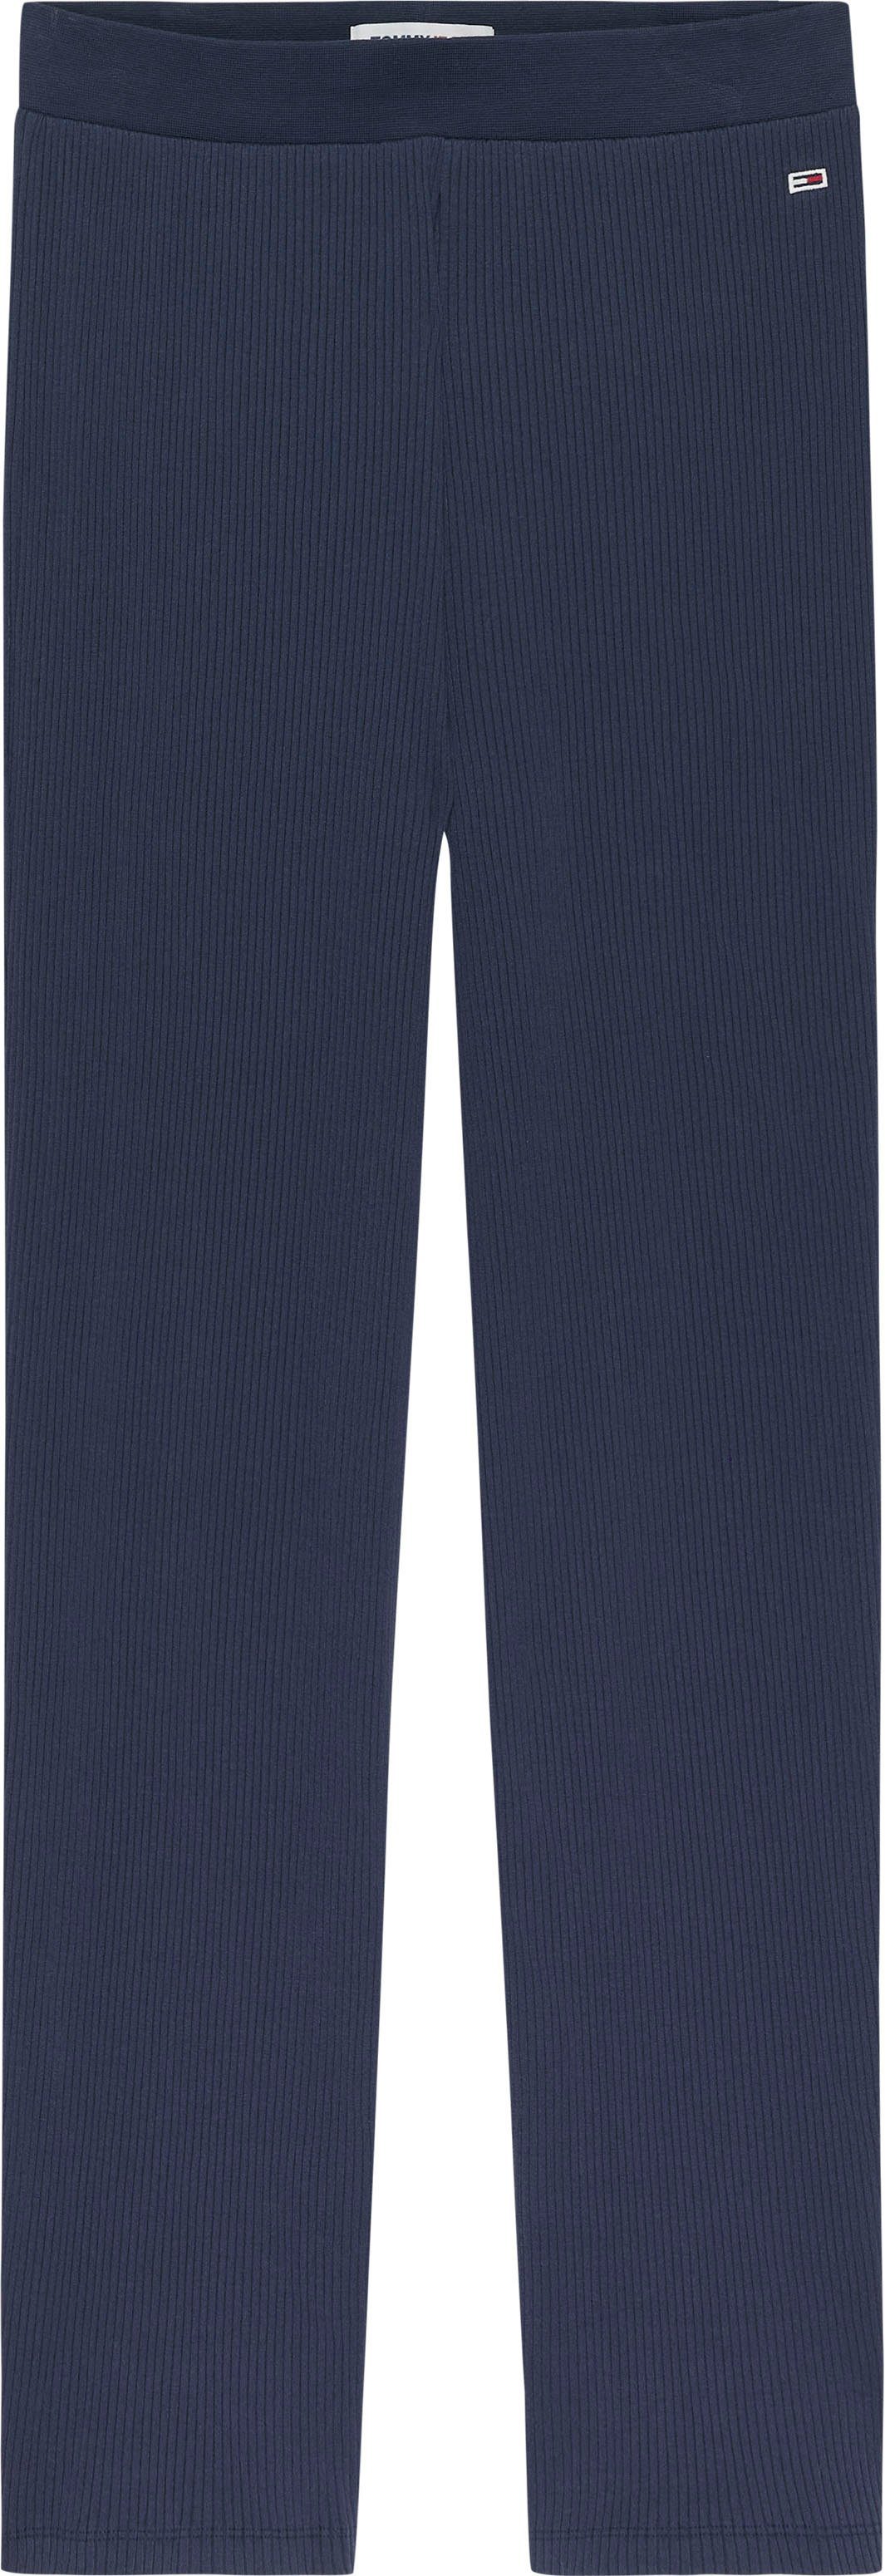 LEG Tommy PANT Strickhose Tommy Logo-Stickerei mit Jeans Jeans KNIT TJW marine WIDE